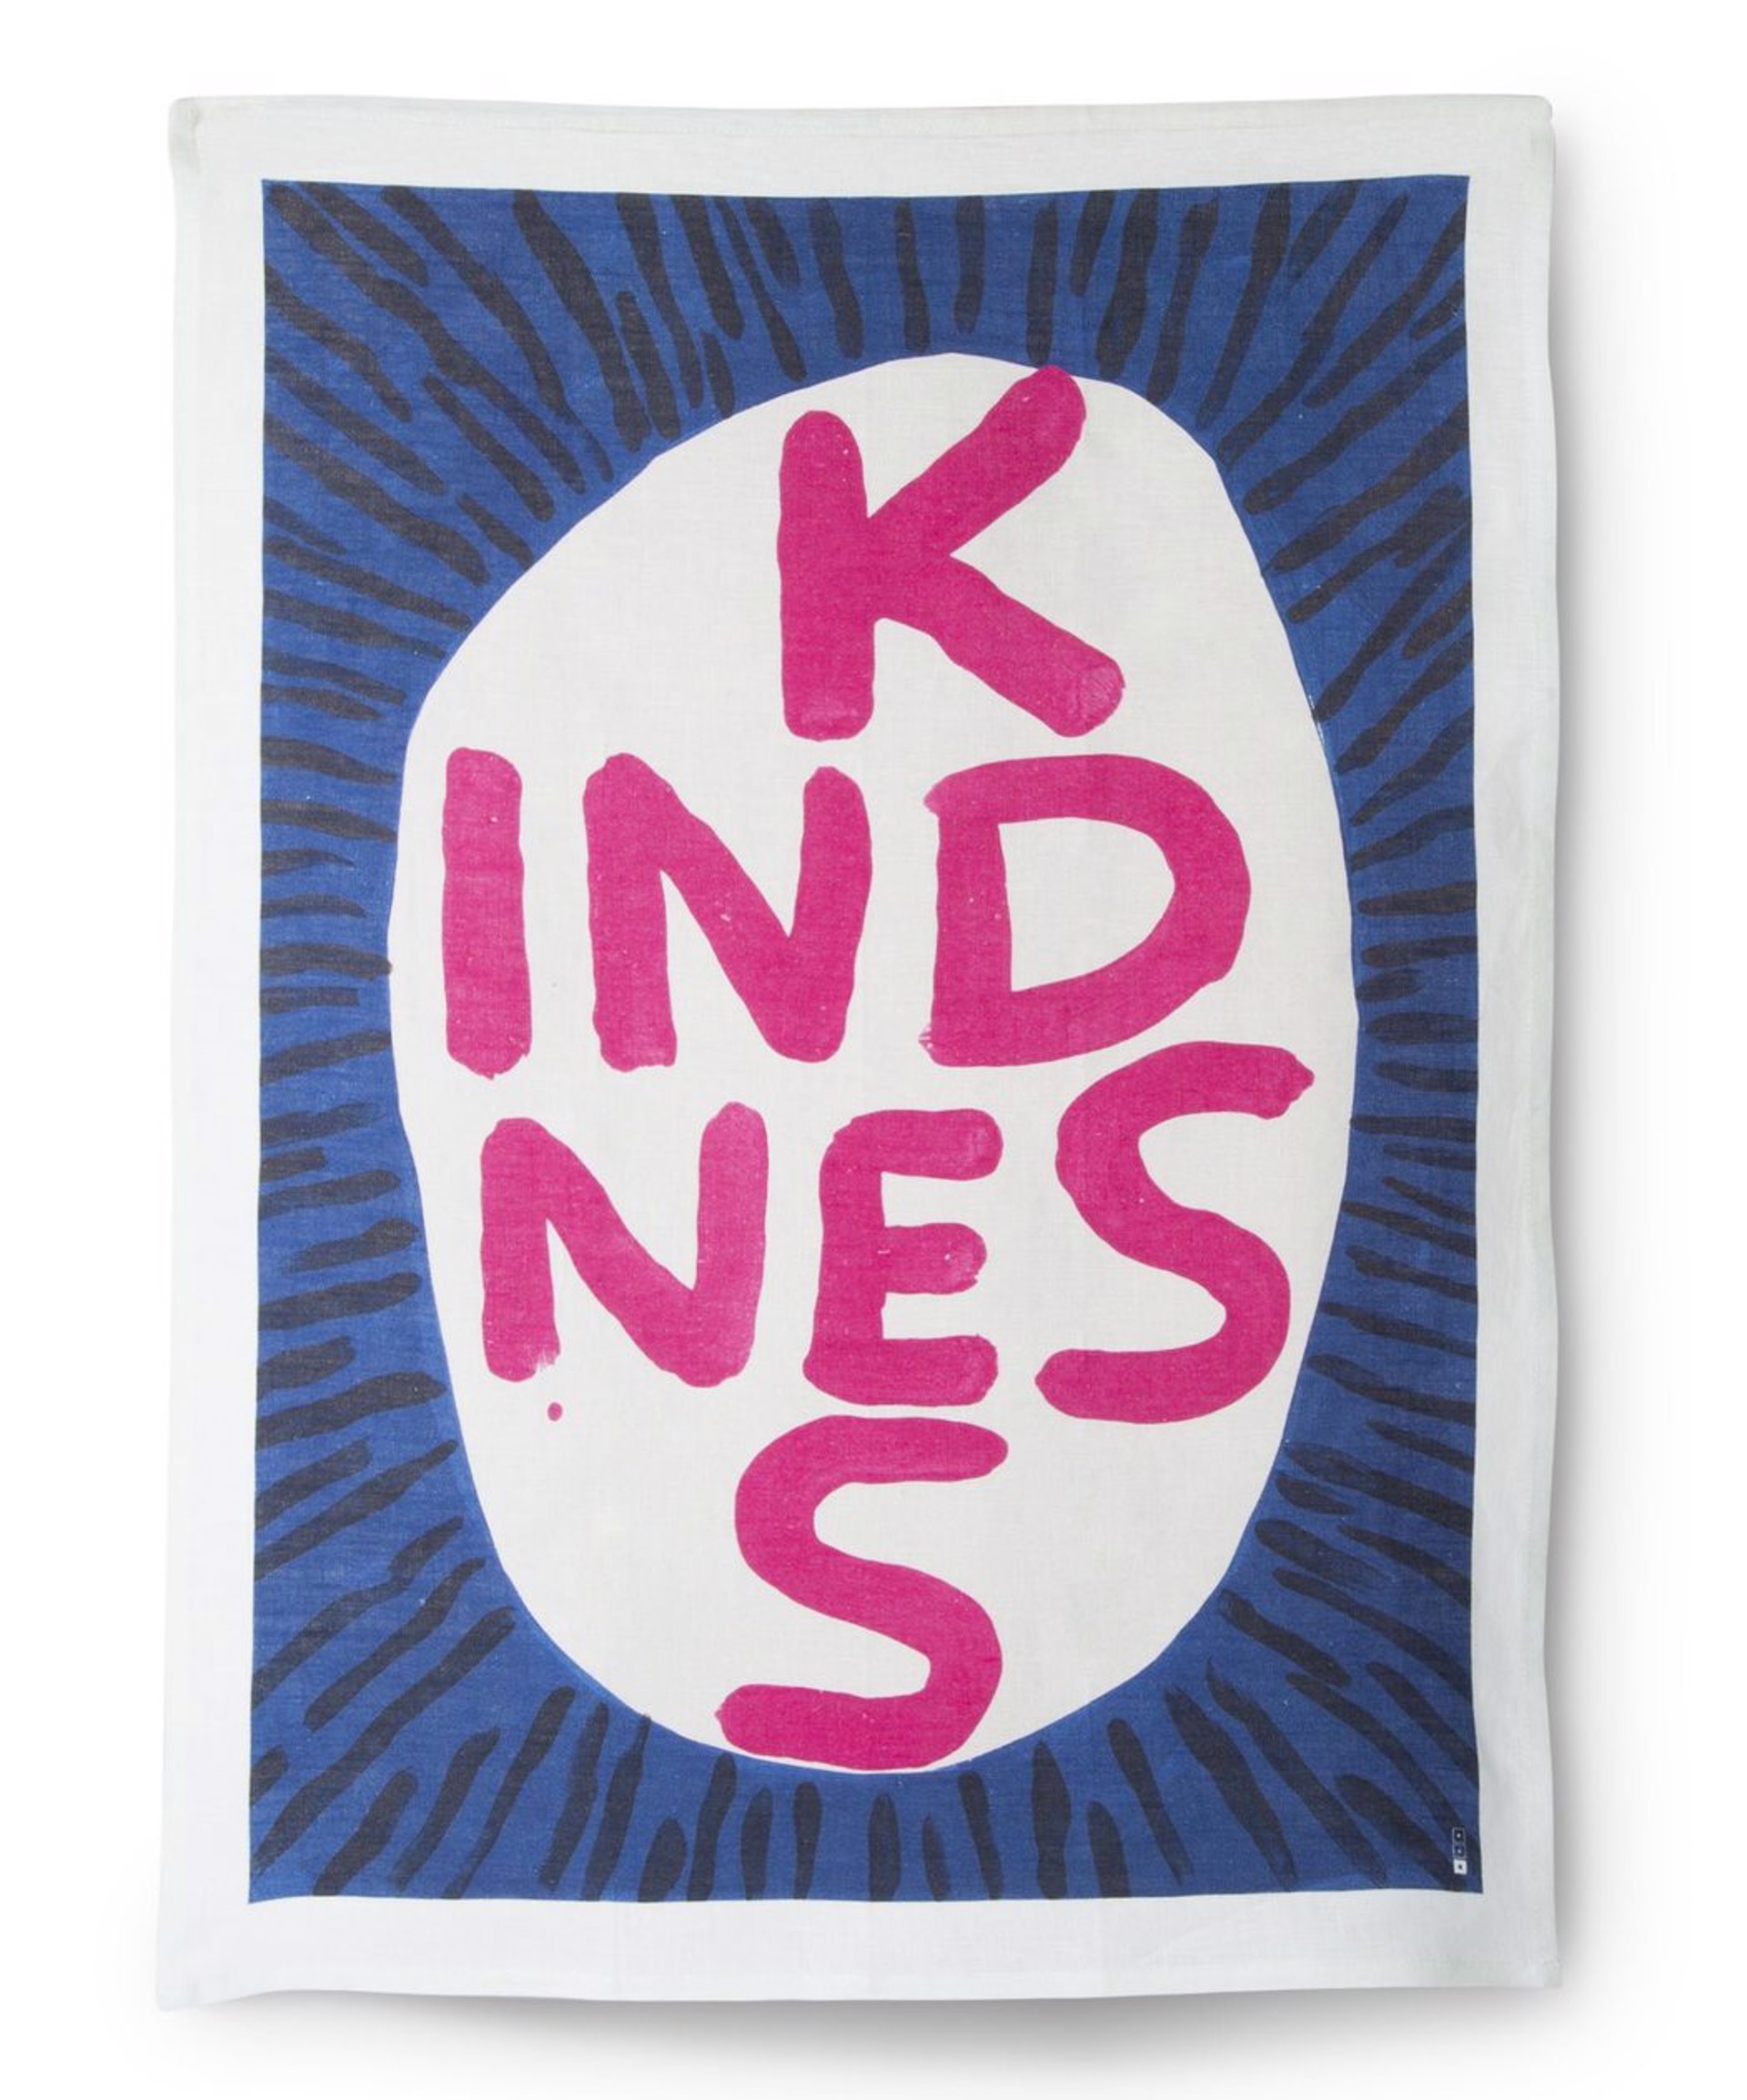 Kindness Tea Towel by David Shrigley